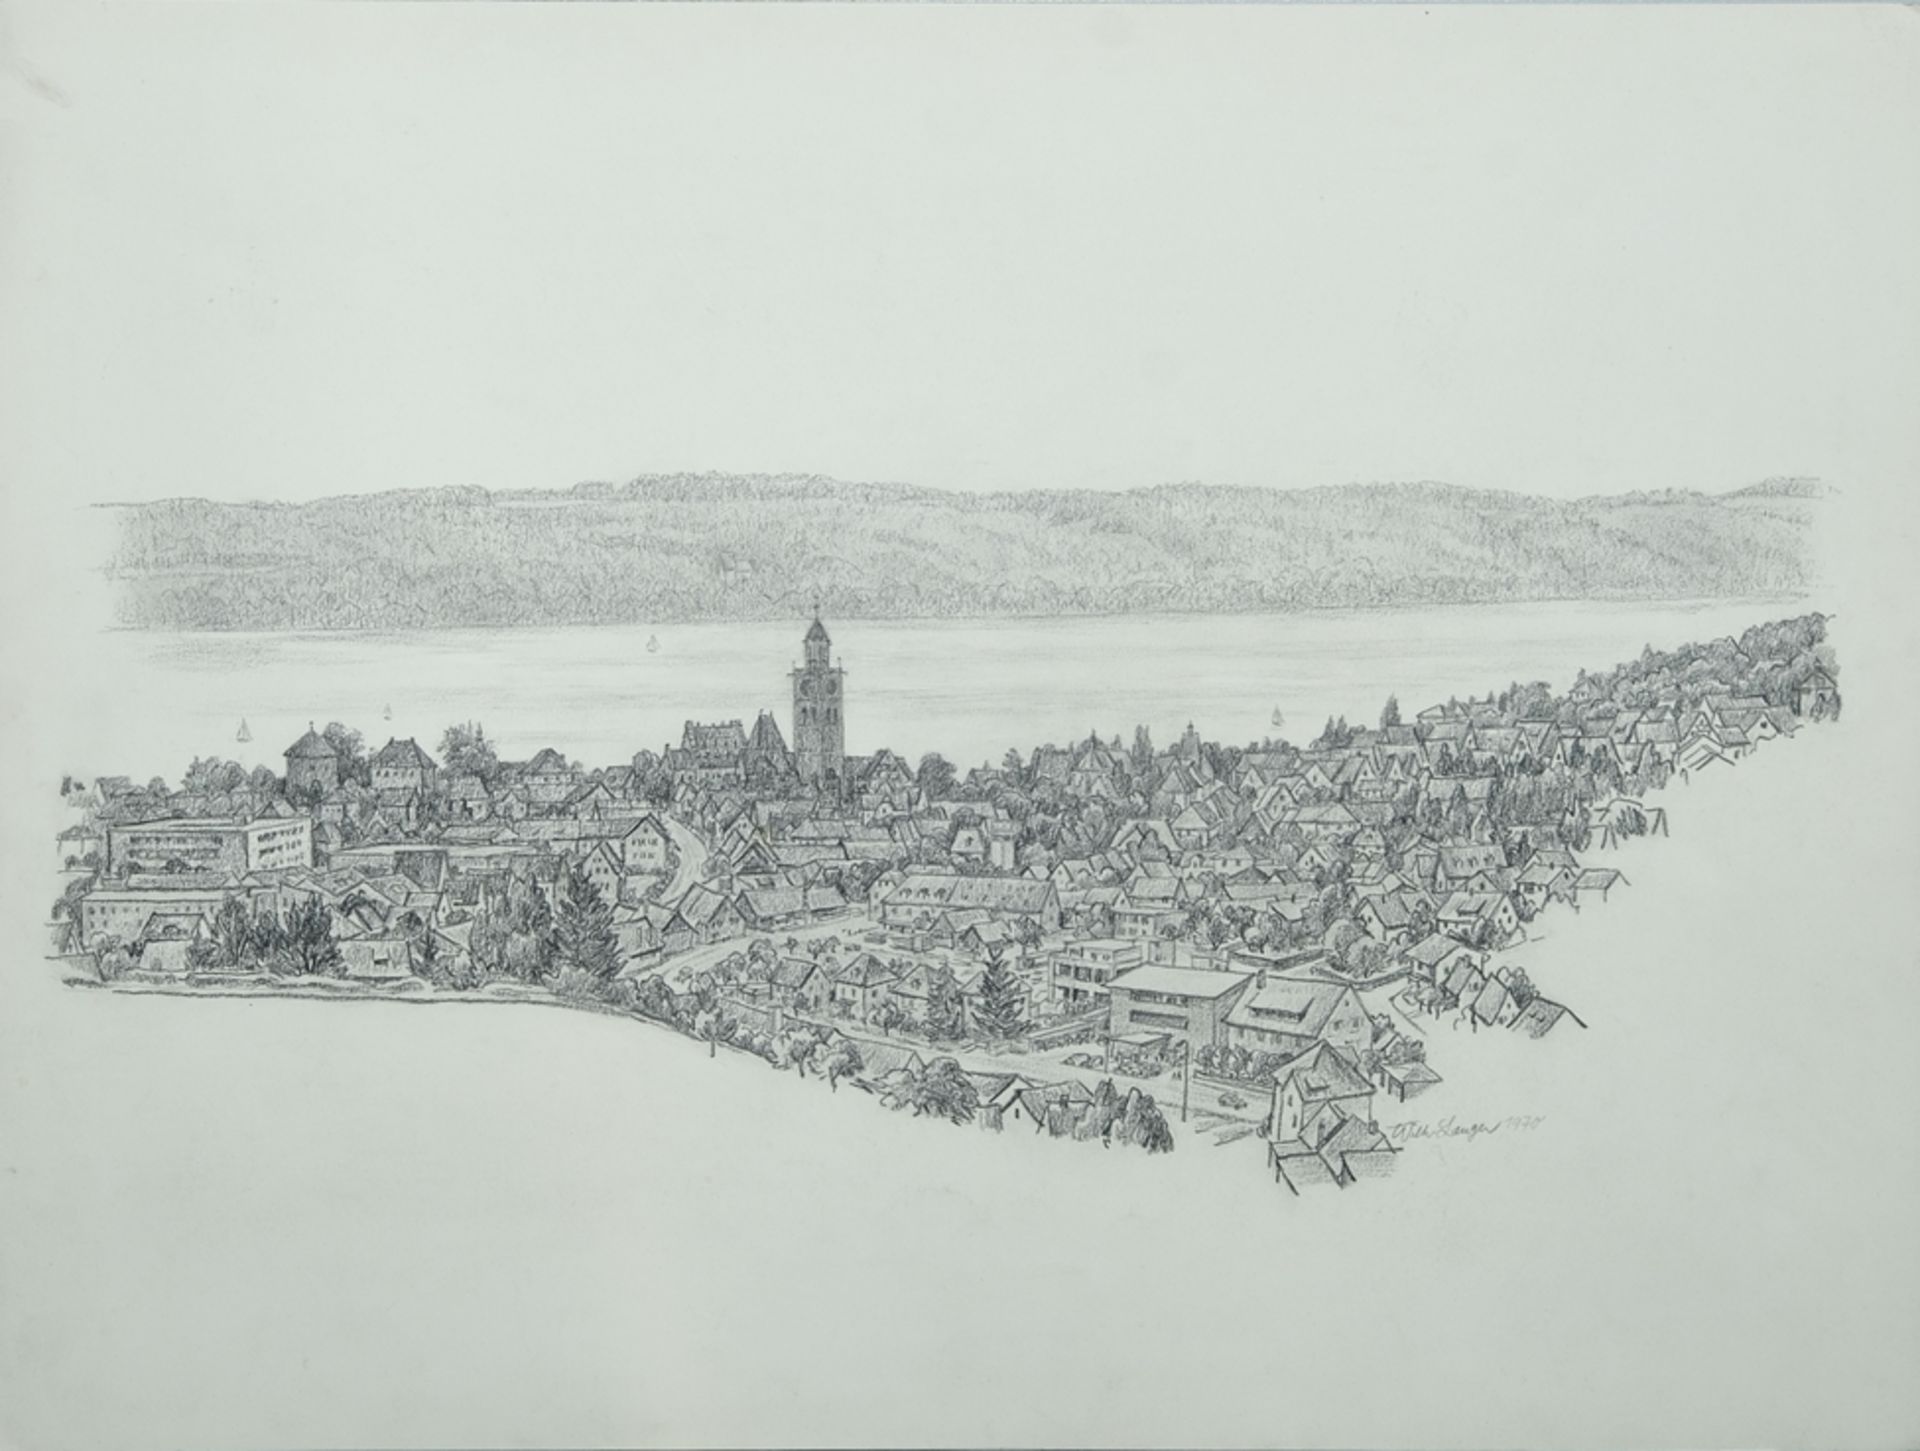 Langer, Wilhelm (20th century) Überlingen and Lake Überlingen, 1970, charcoal and pencil on paper.